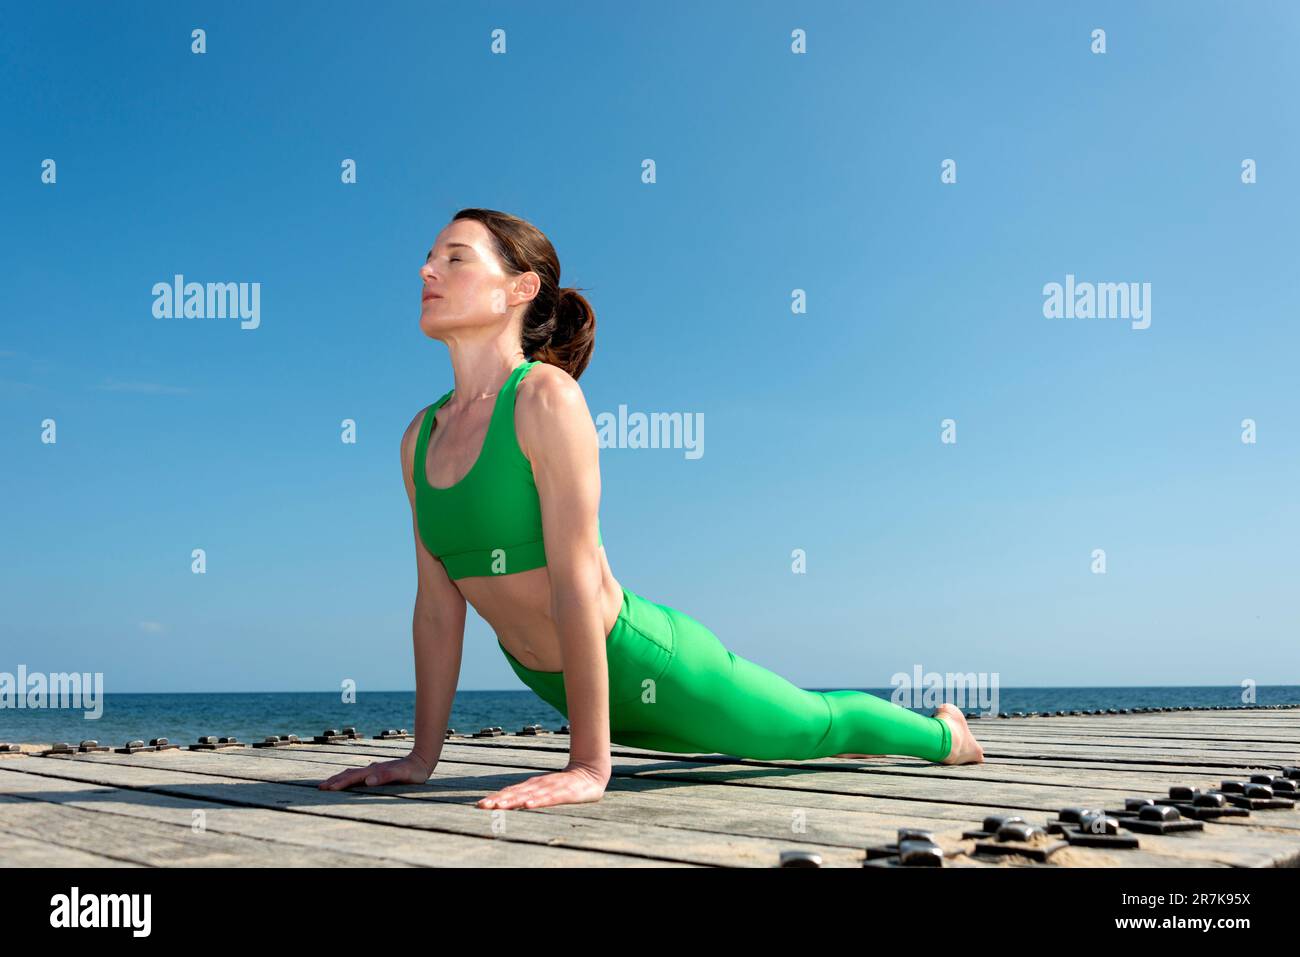 Fit Frau übt Yoga asana urdhva mukha svanasana - nach oben schauende Hundehaltung, draußen am Meer. Stockfoto